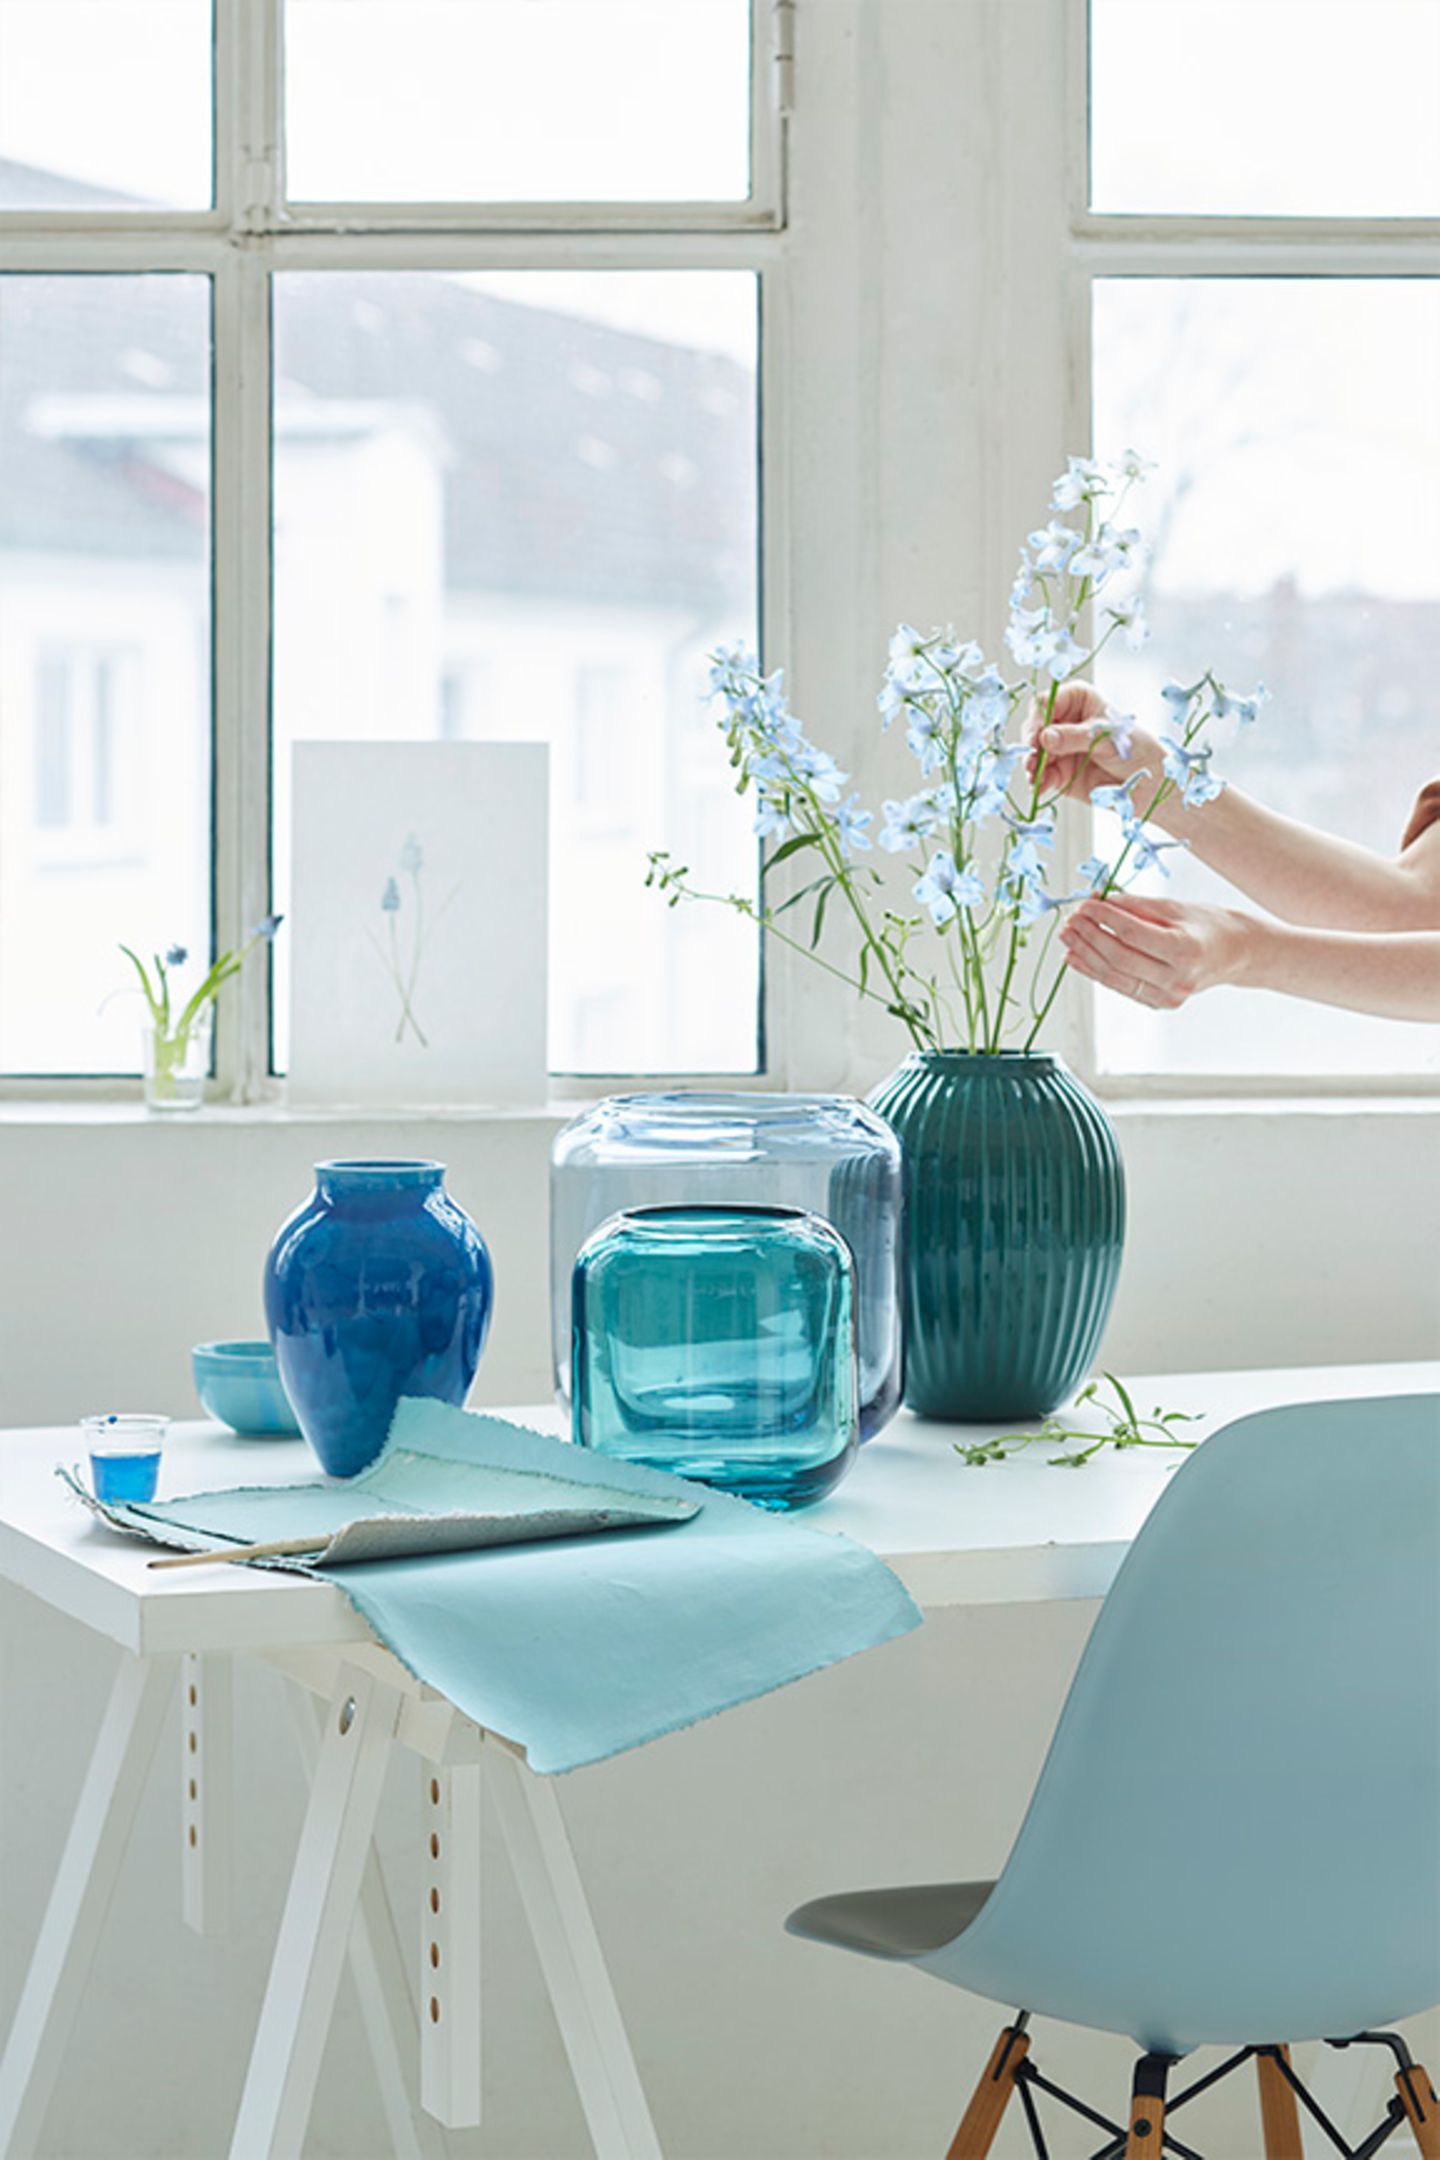 Vase aus mittelblau glasierter Keramik und blau-grüne Glasgefäße